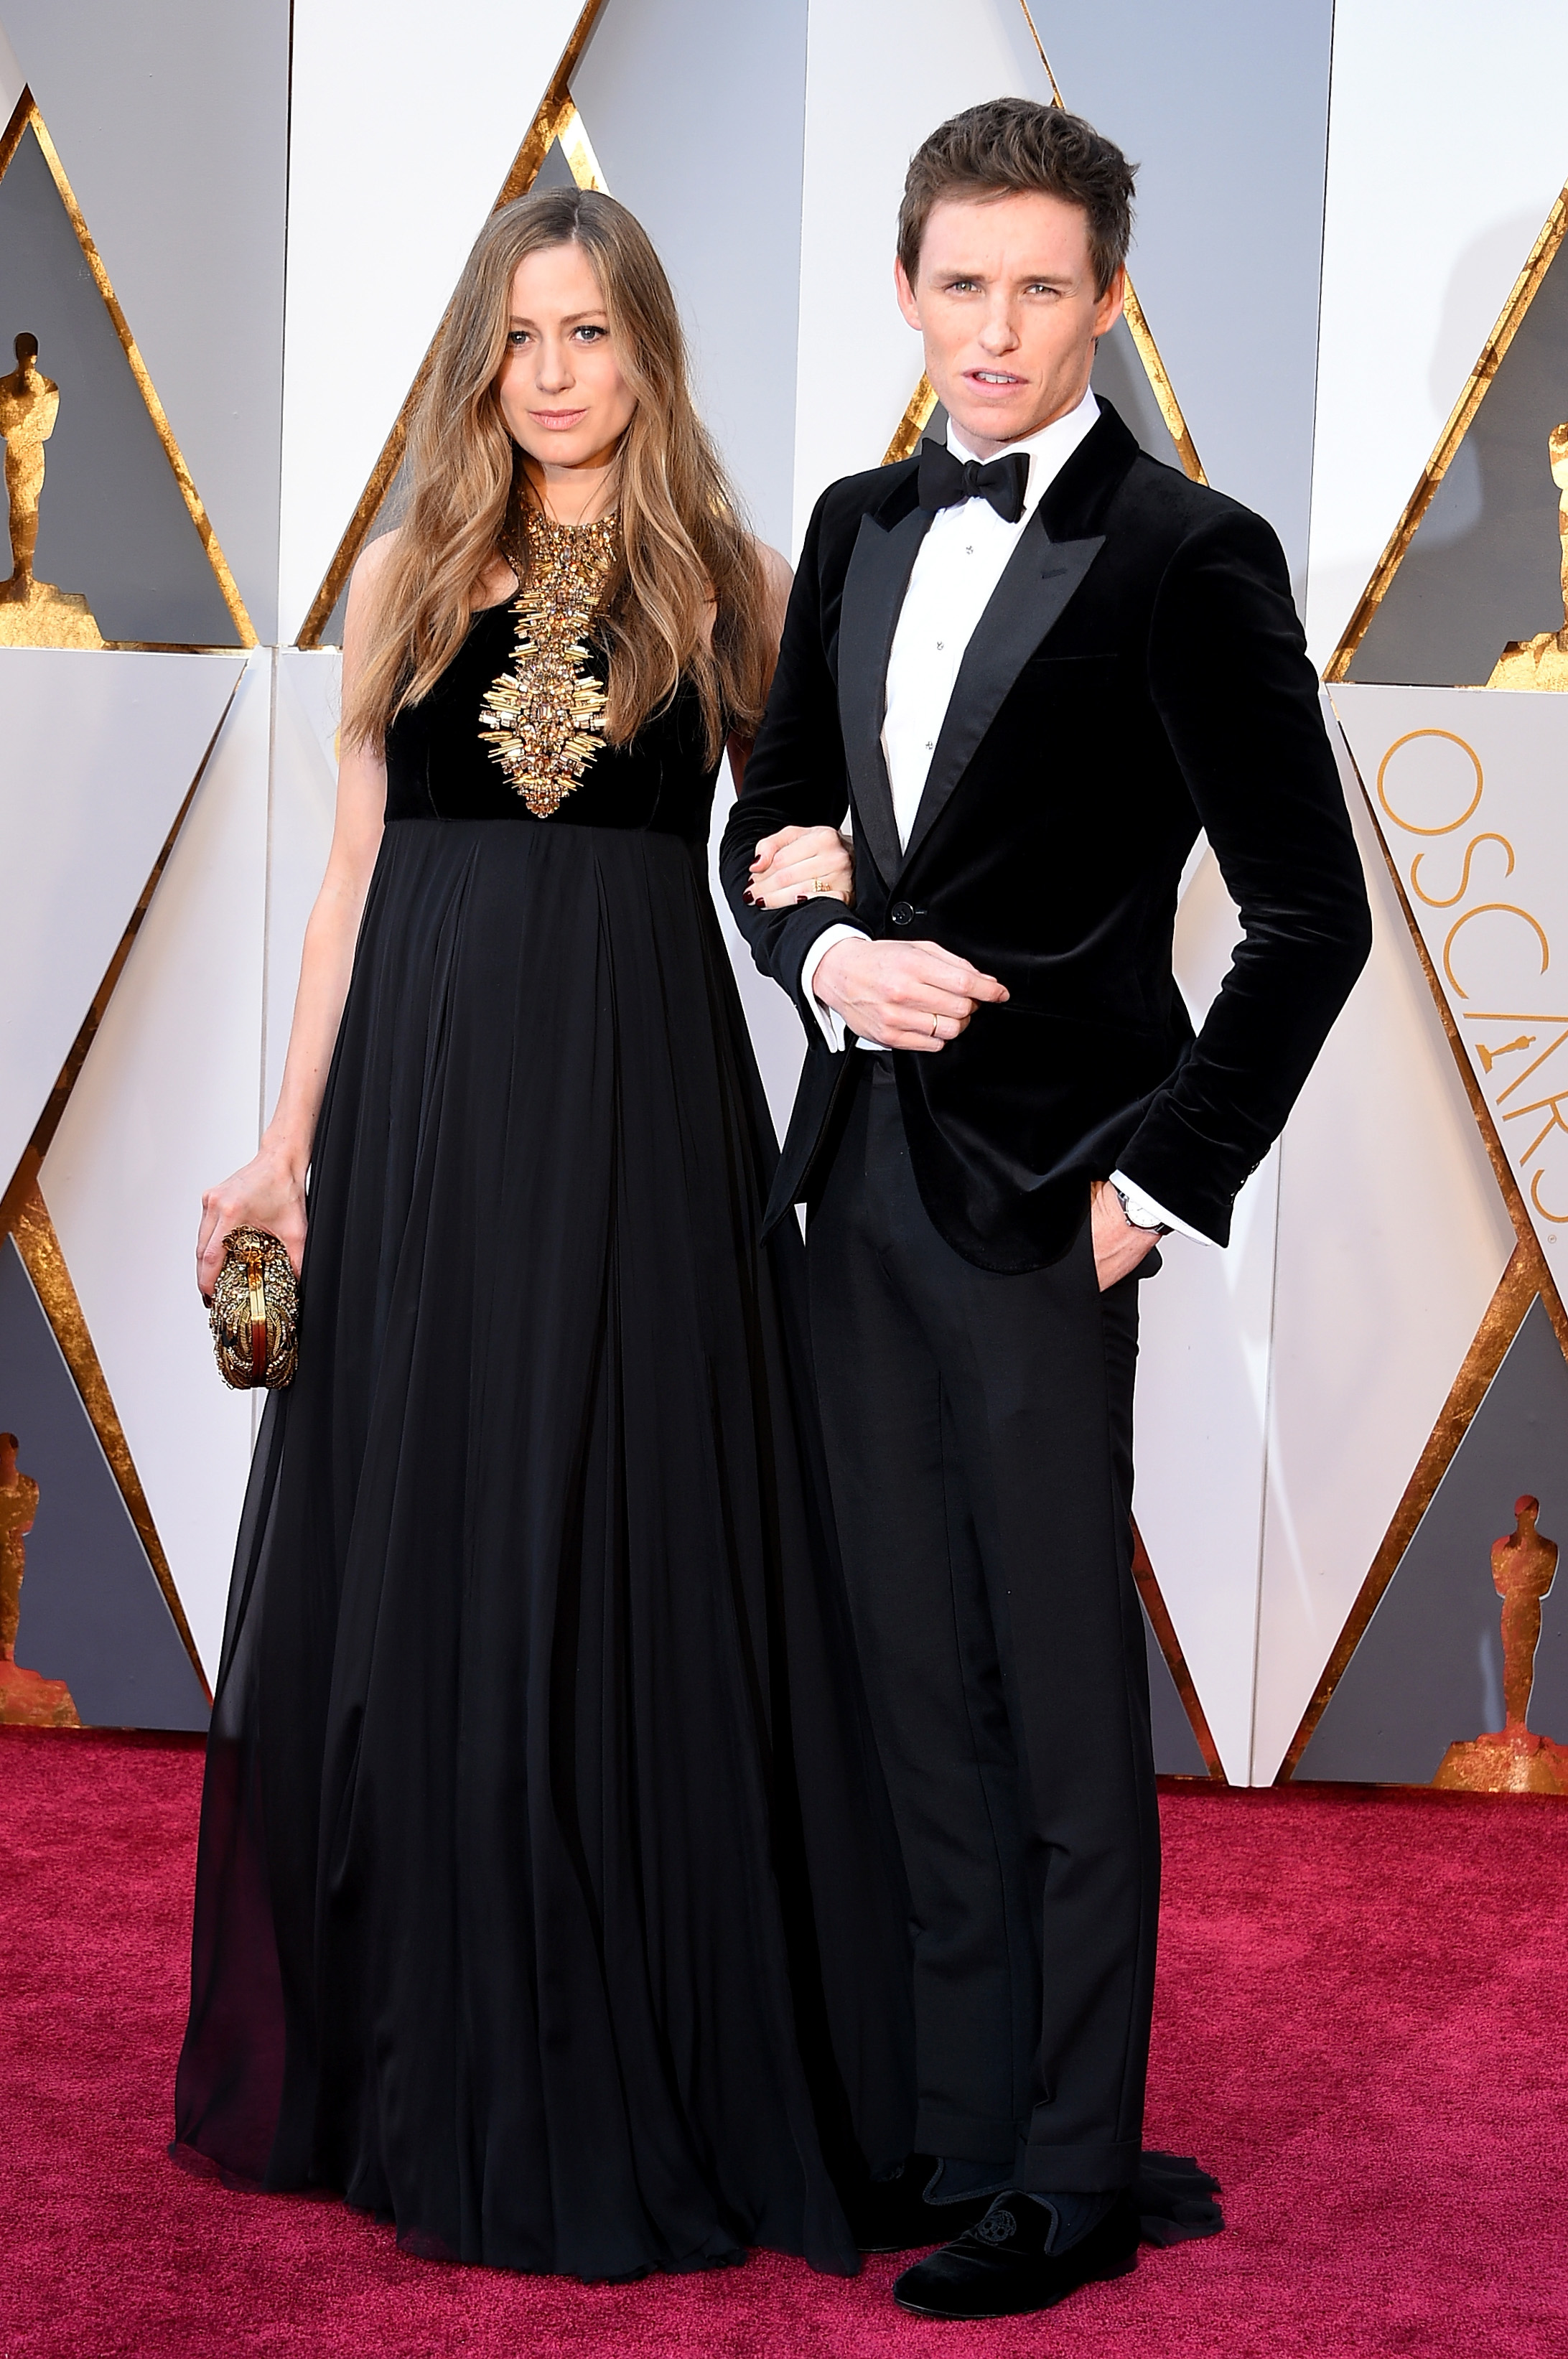 Hannah Redmayne and Eddie Redmayne attend the 88th Annual Academy Awards on Feb. 28, 2016 in Hollywood, Calif.